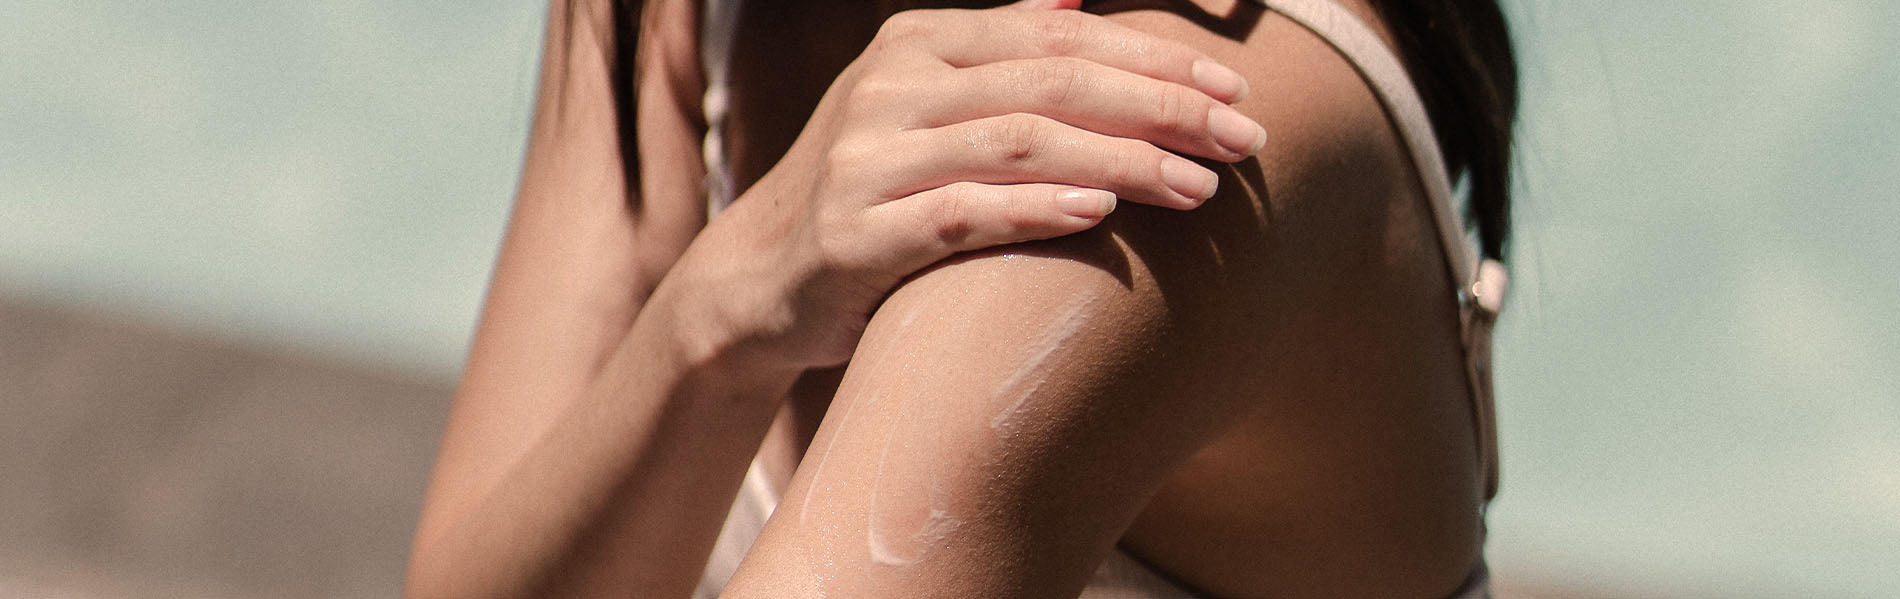 Does Sunscreen Prevent Wrinkles?